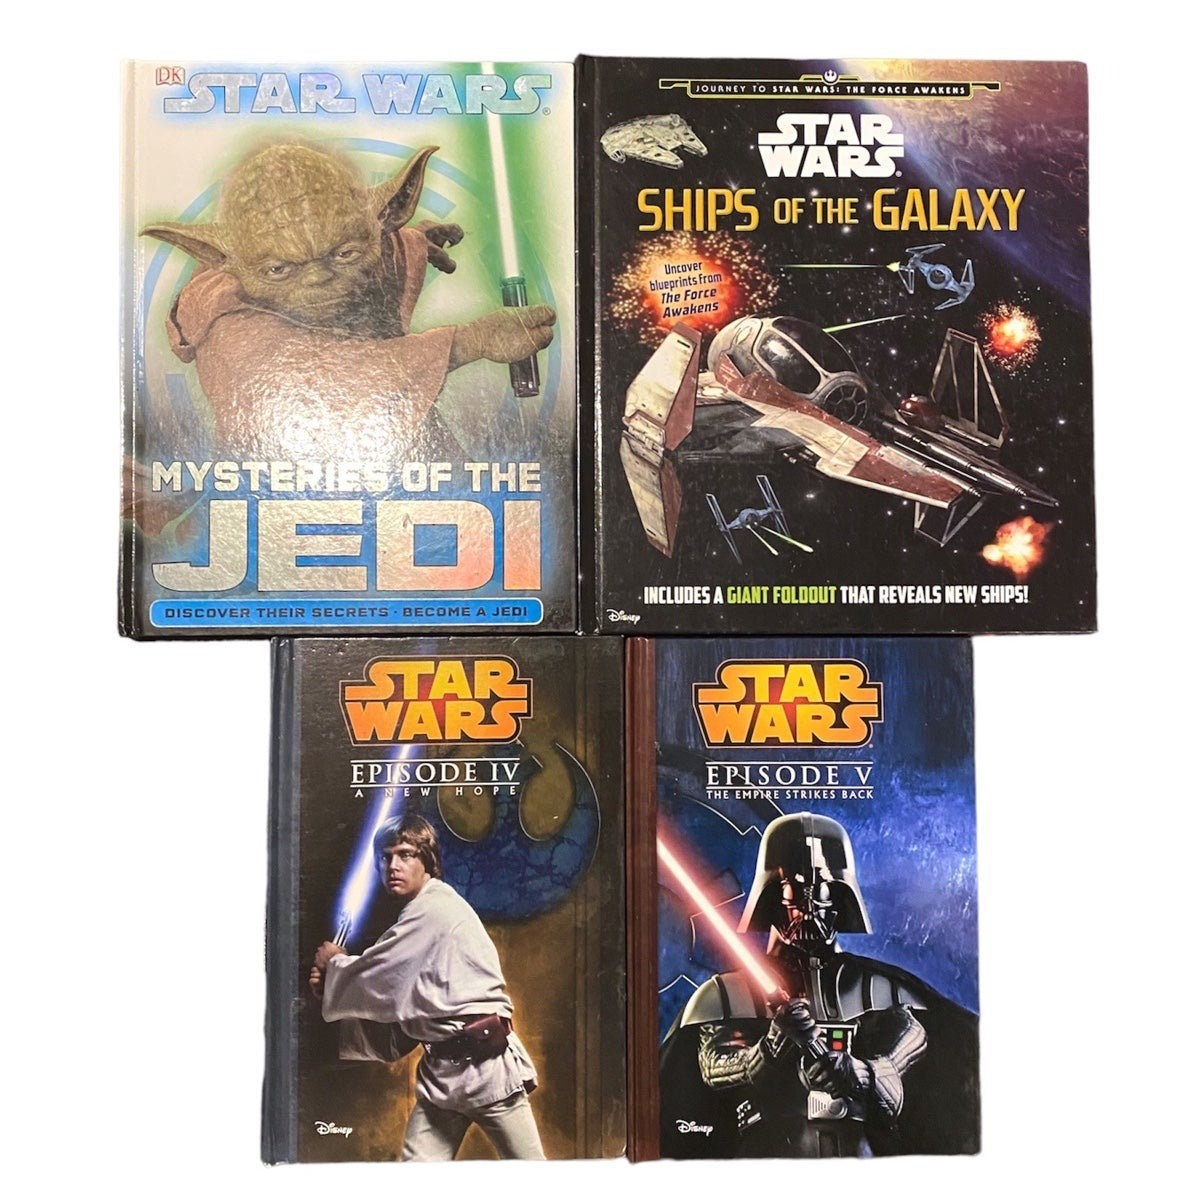 Star Wars books bundle